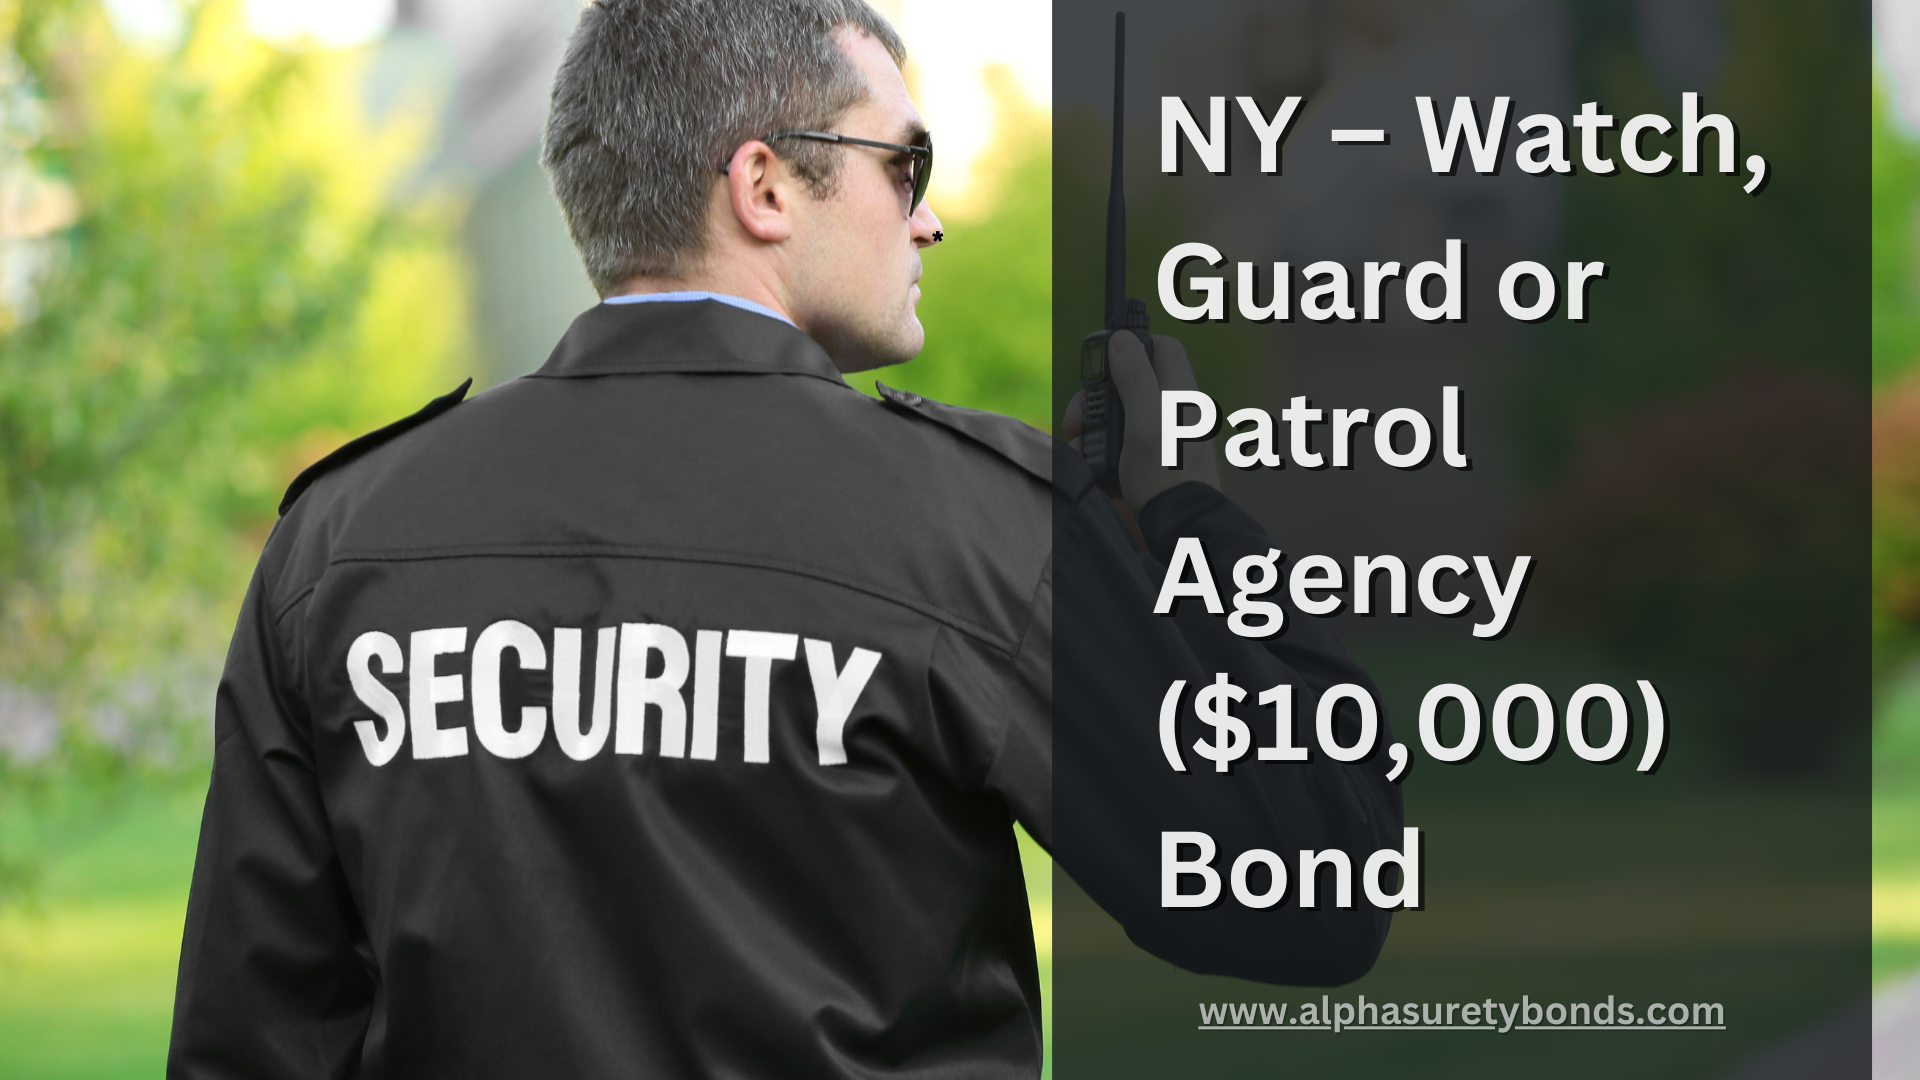 Surety Bond-NY – Watch, Guard or Patrol Agency ($10,000) Bond